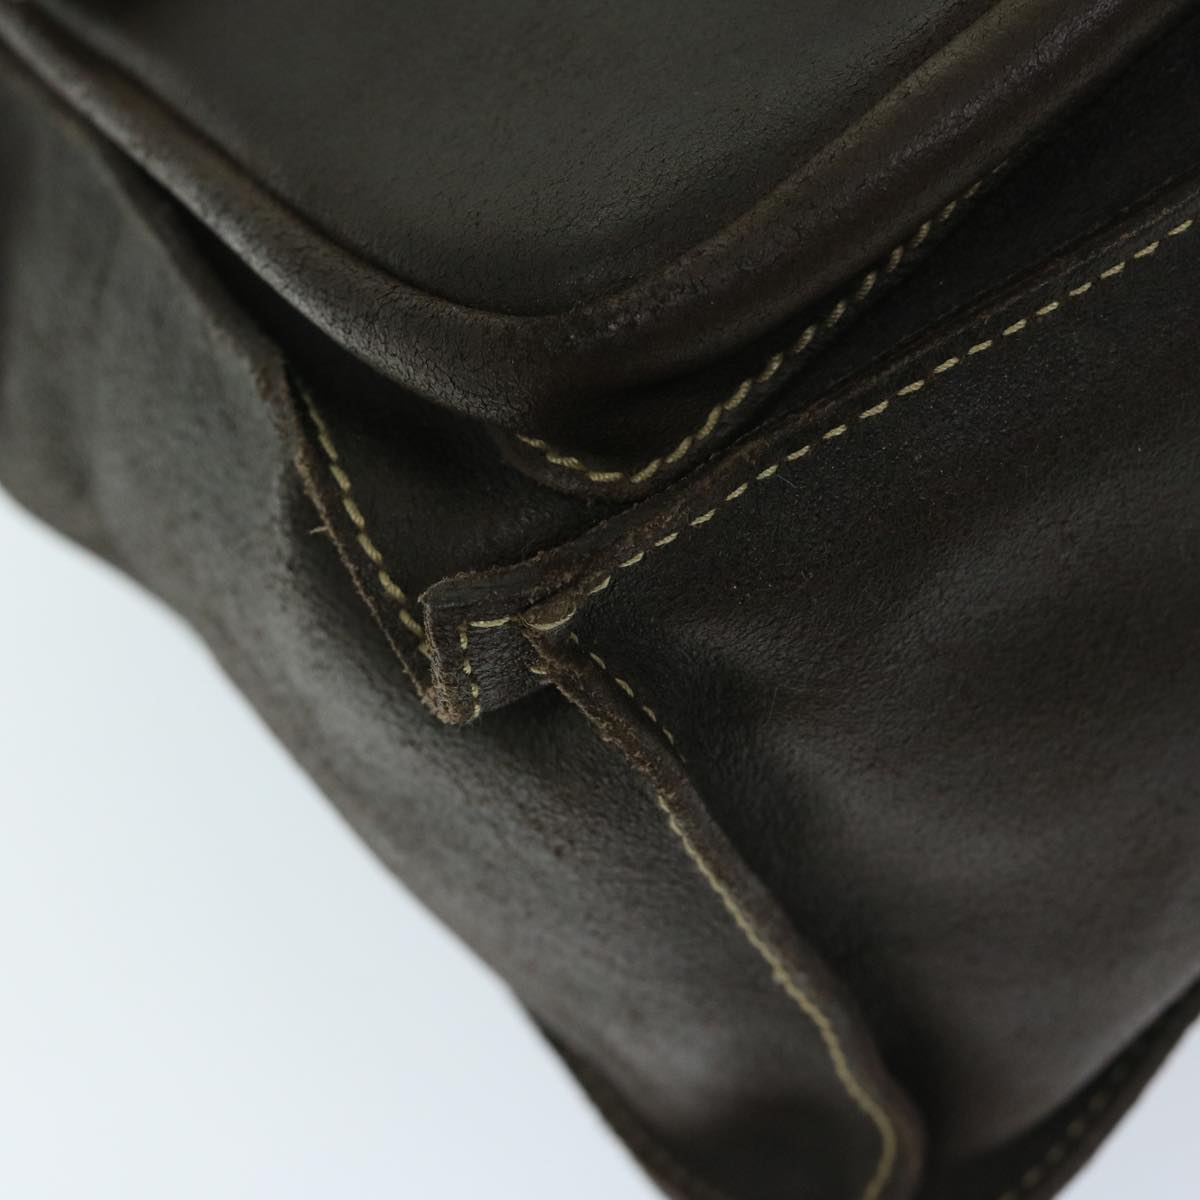 Miu Miu Tote Bag Leather Brown Auth bs12940